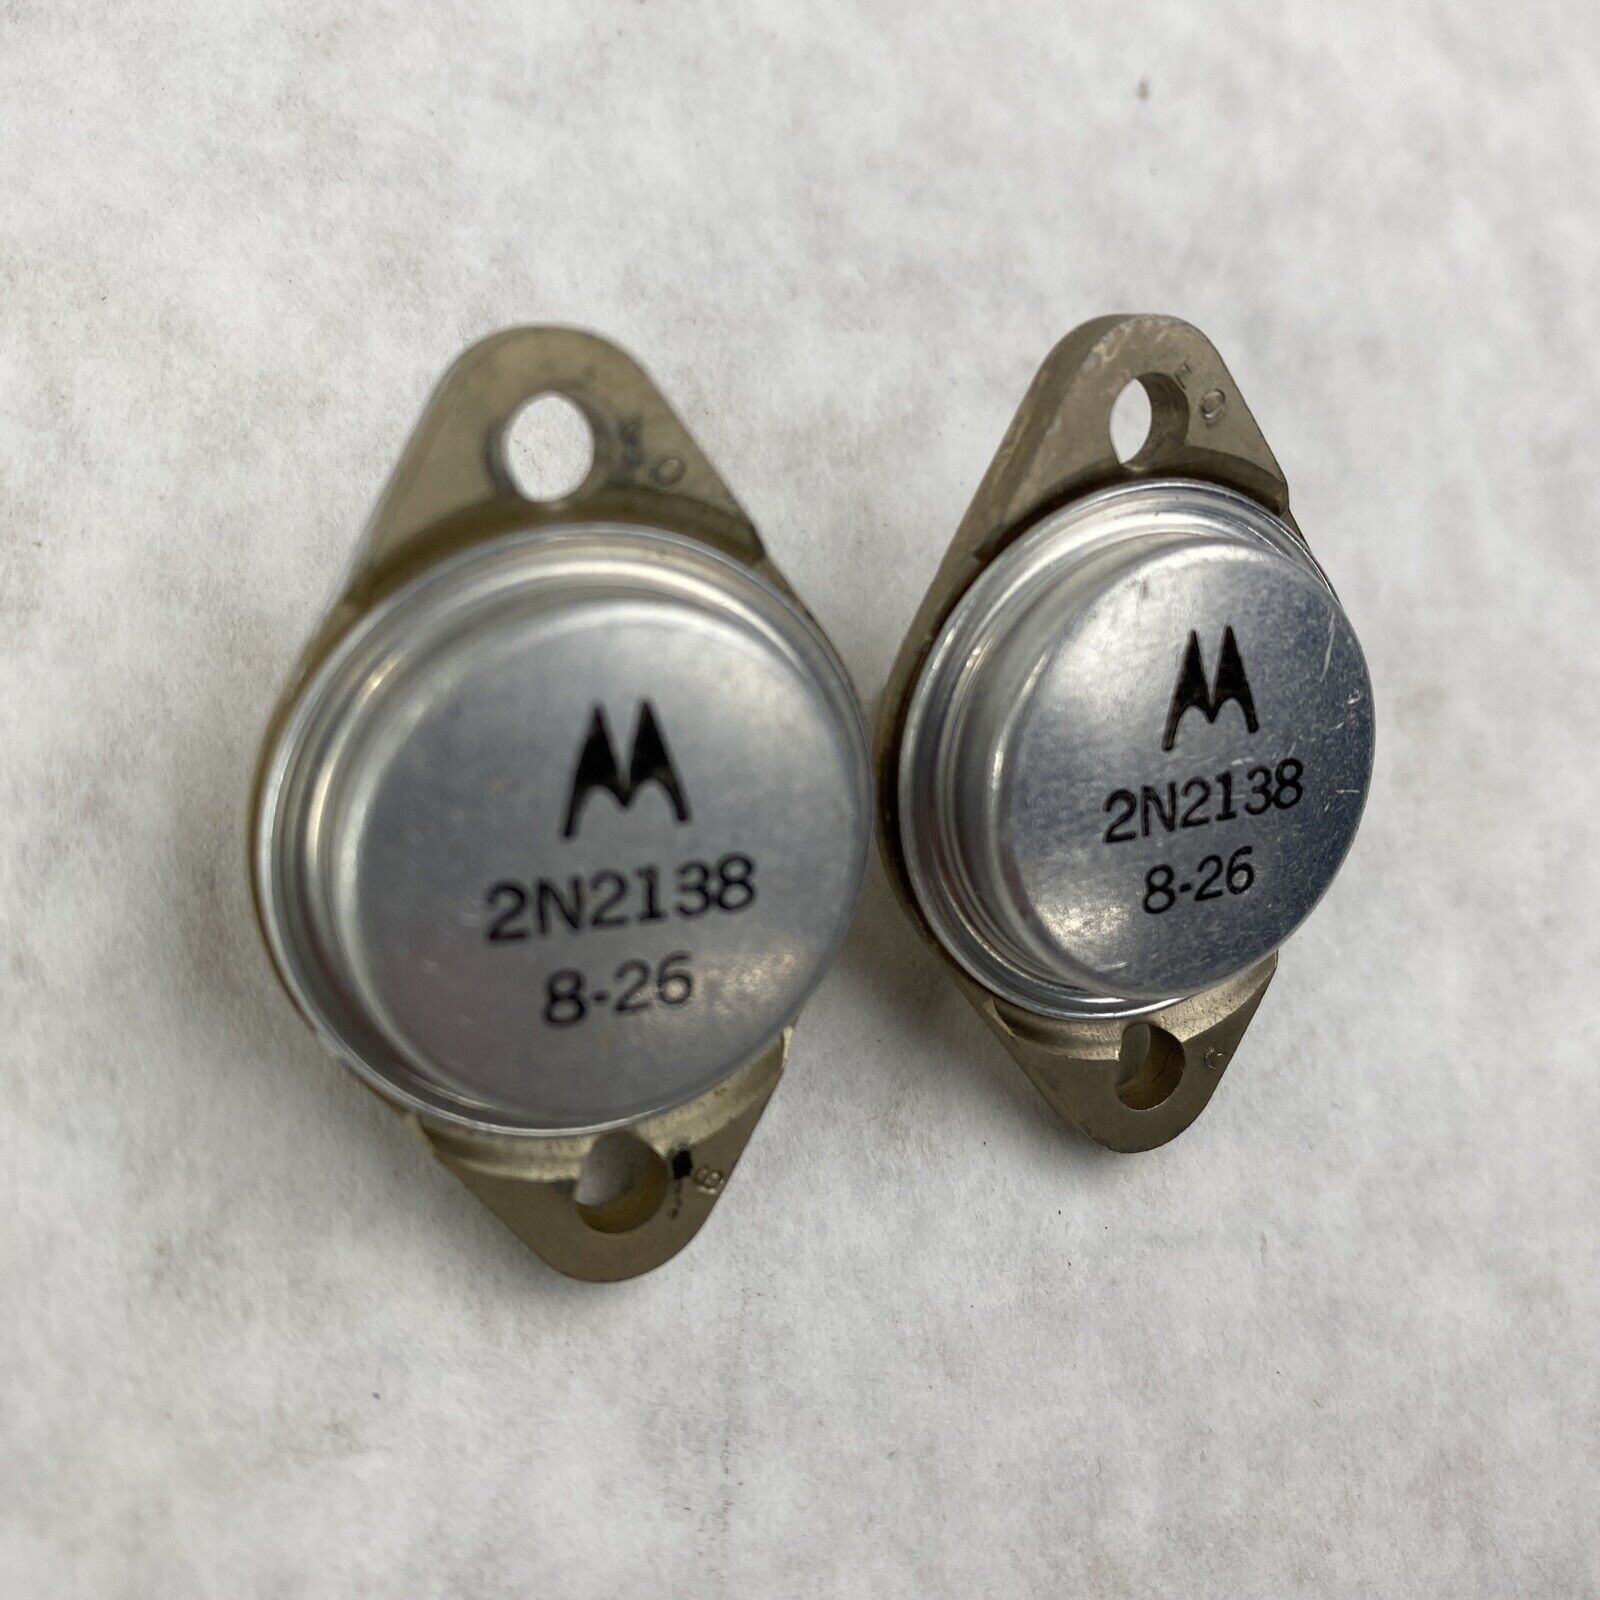 Lot( 2 ) Motorola 2N2138 Bipolar Transistor 8-26